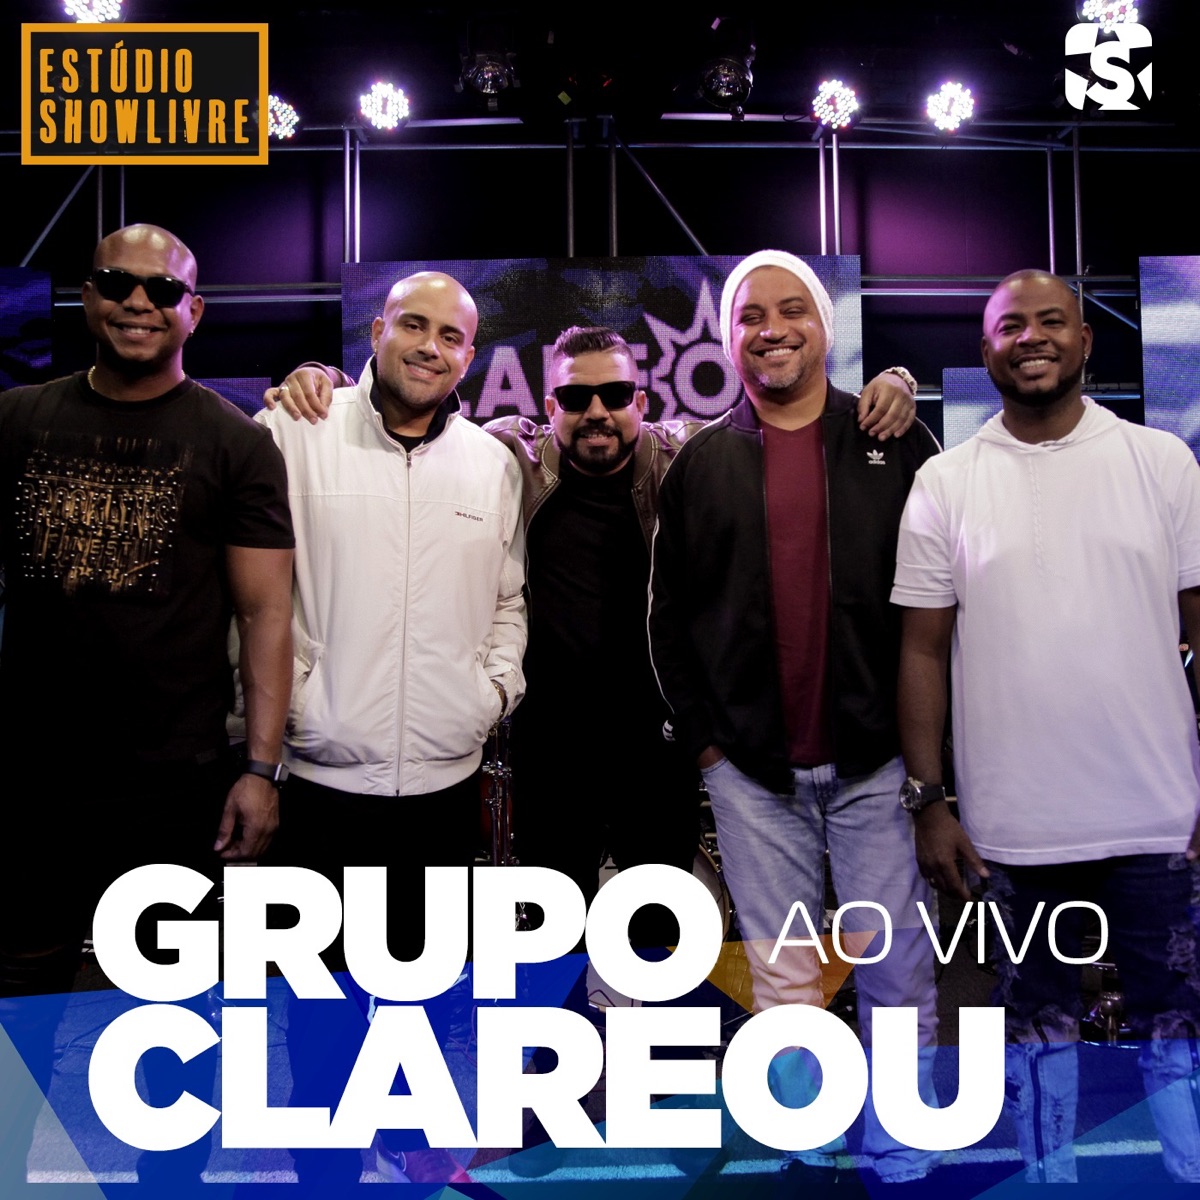 Sinuca de Bico (Ao Vivo) - Single - Album by Grupo Clareou & Uendel  Pinheiro - Apple Music